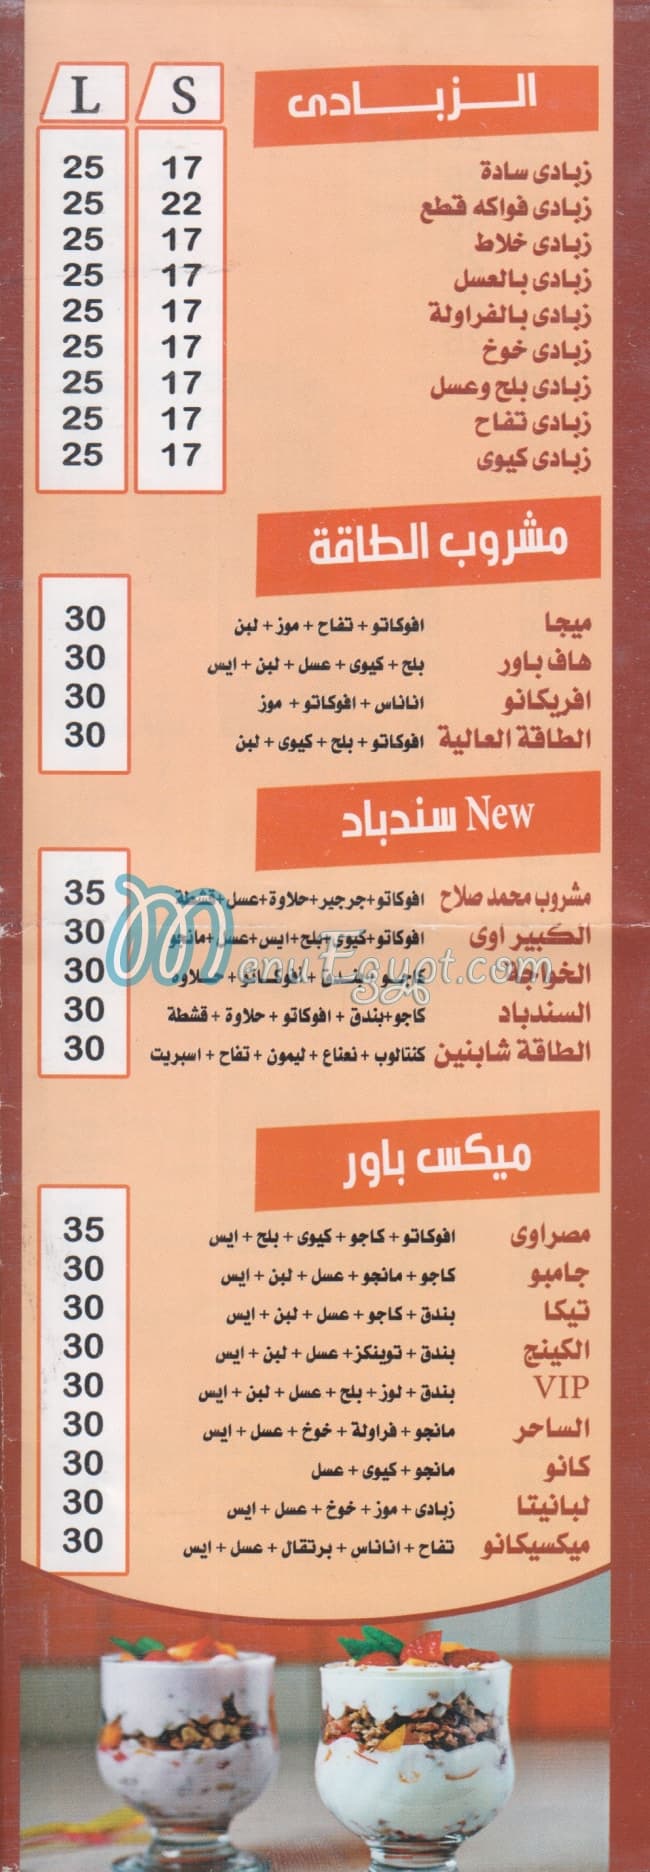 freshat sindbad menu Egypt 1